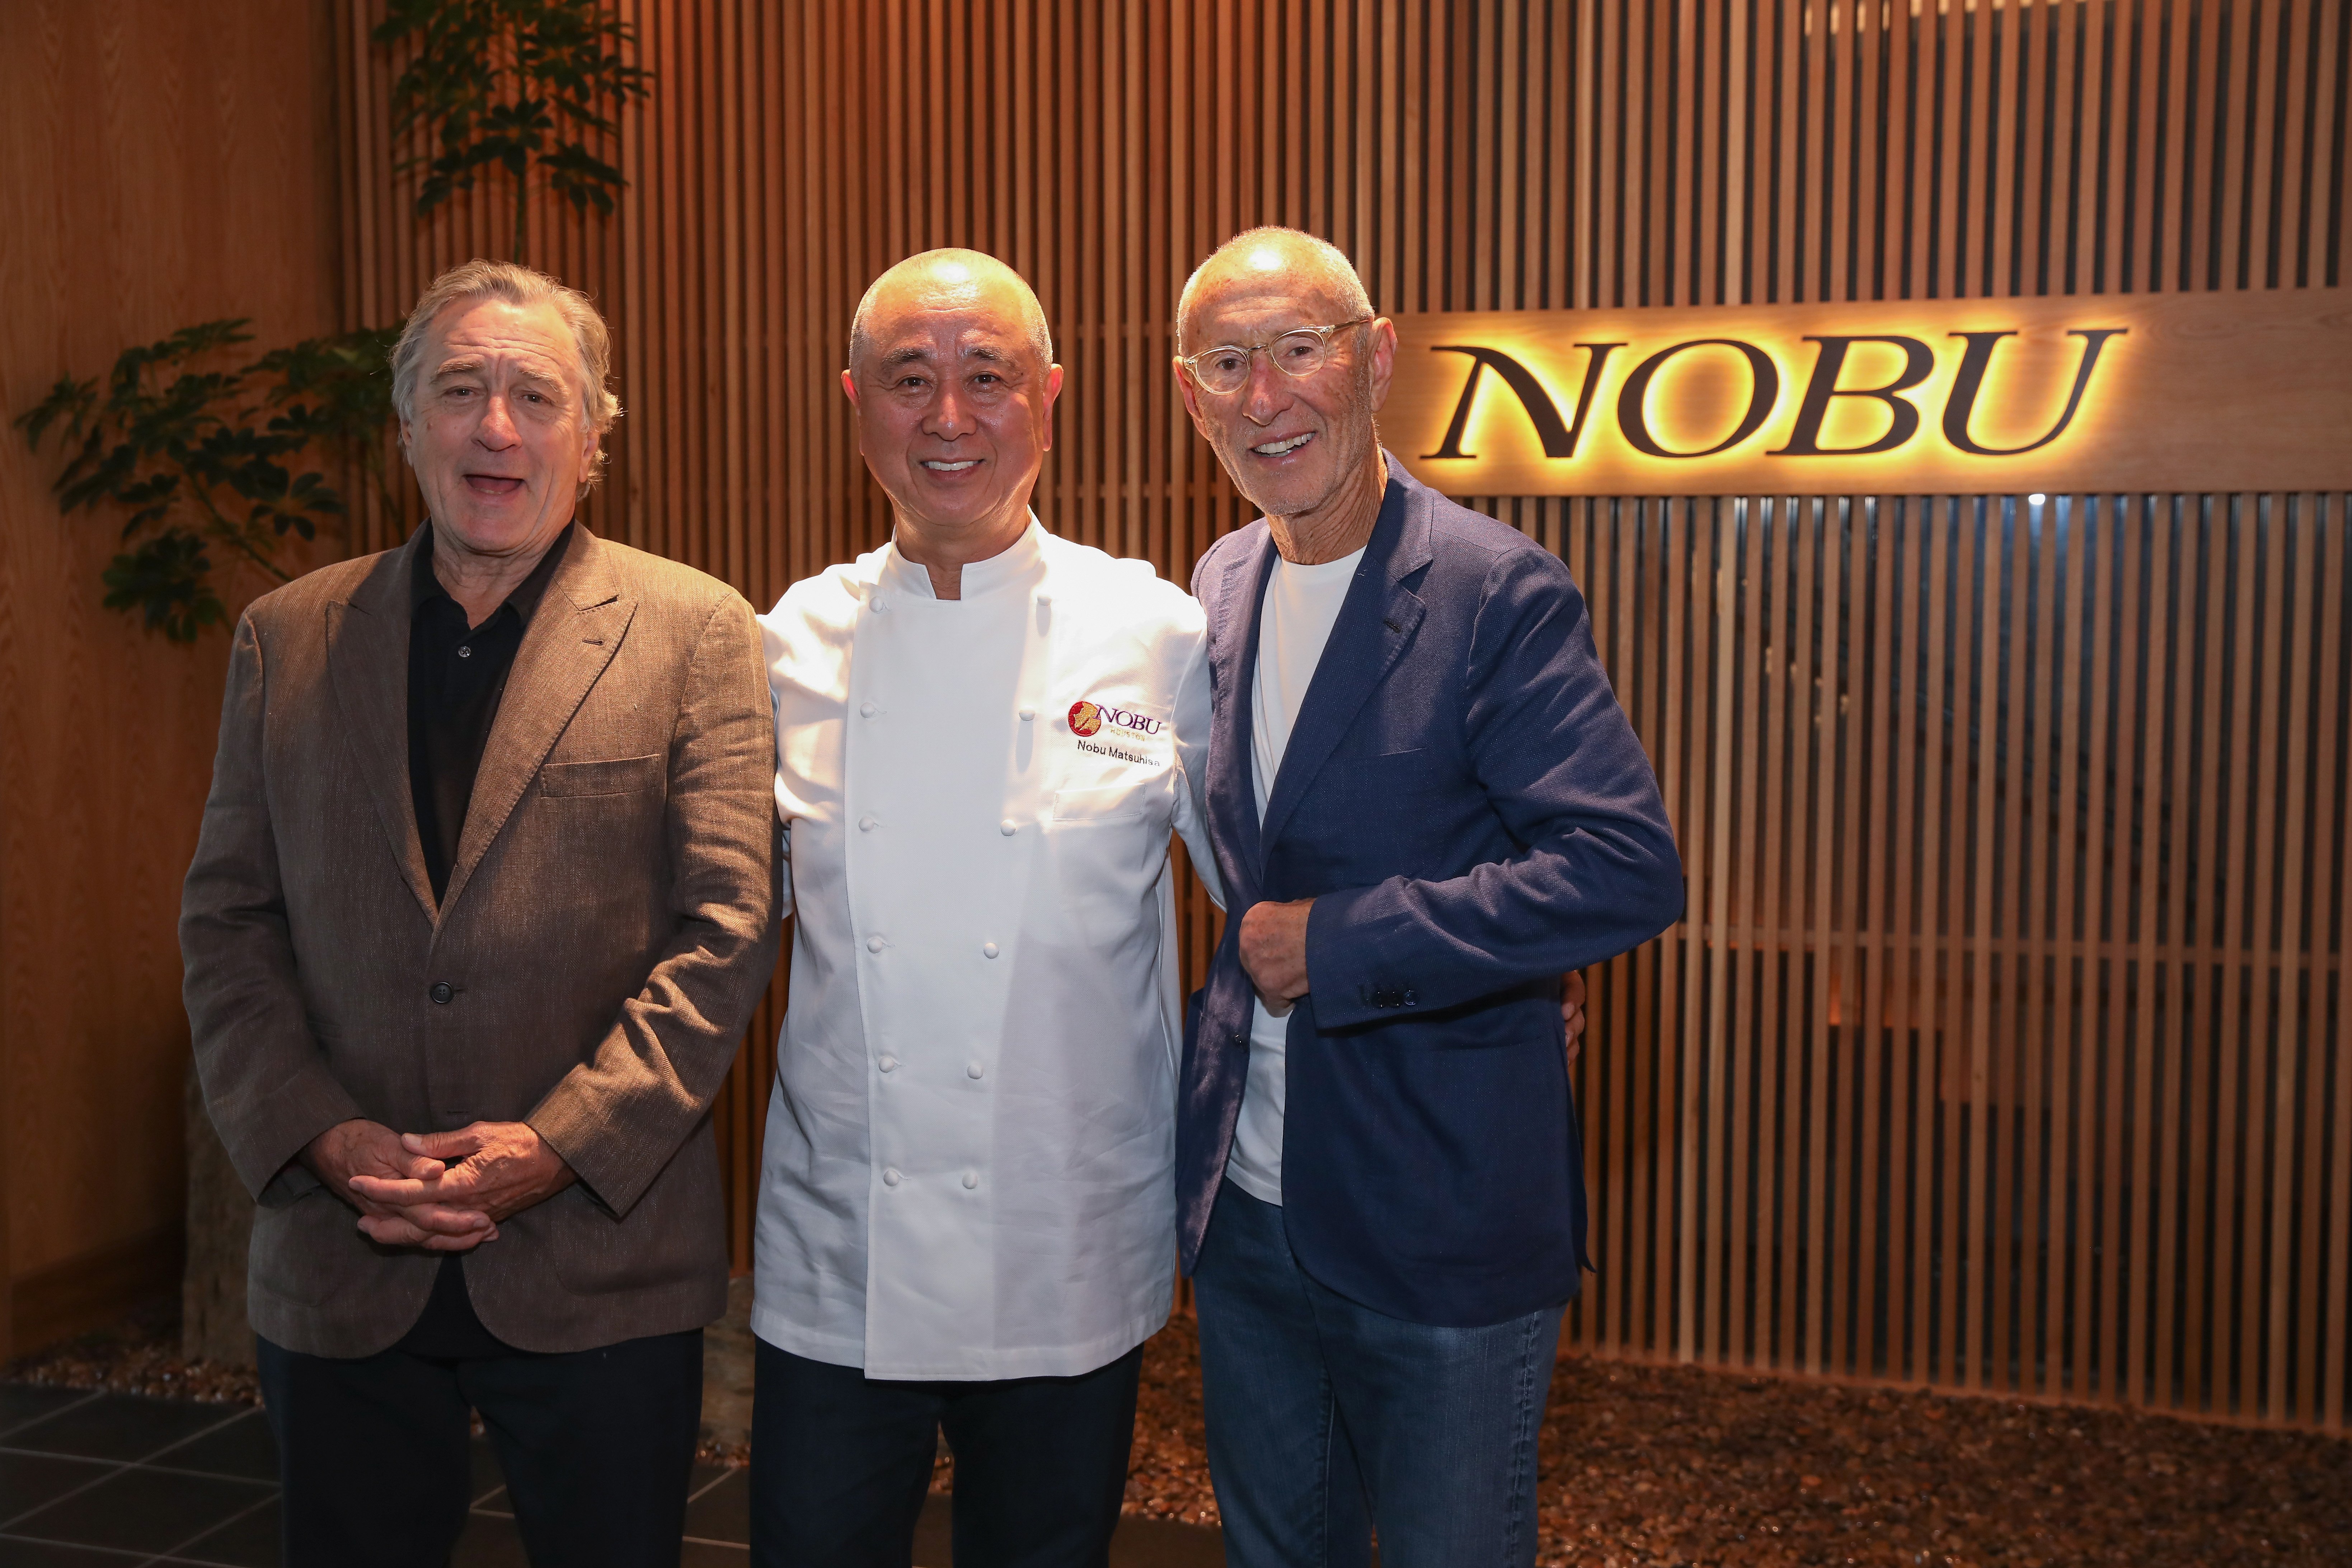 Robert De Niro with Nobu founders Chef Nobu Matsuhisa and Meir Teper in Houston Texas. | Source: Getty Images